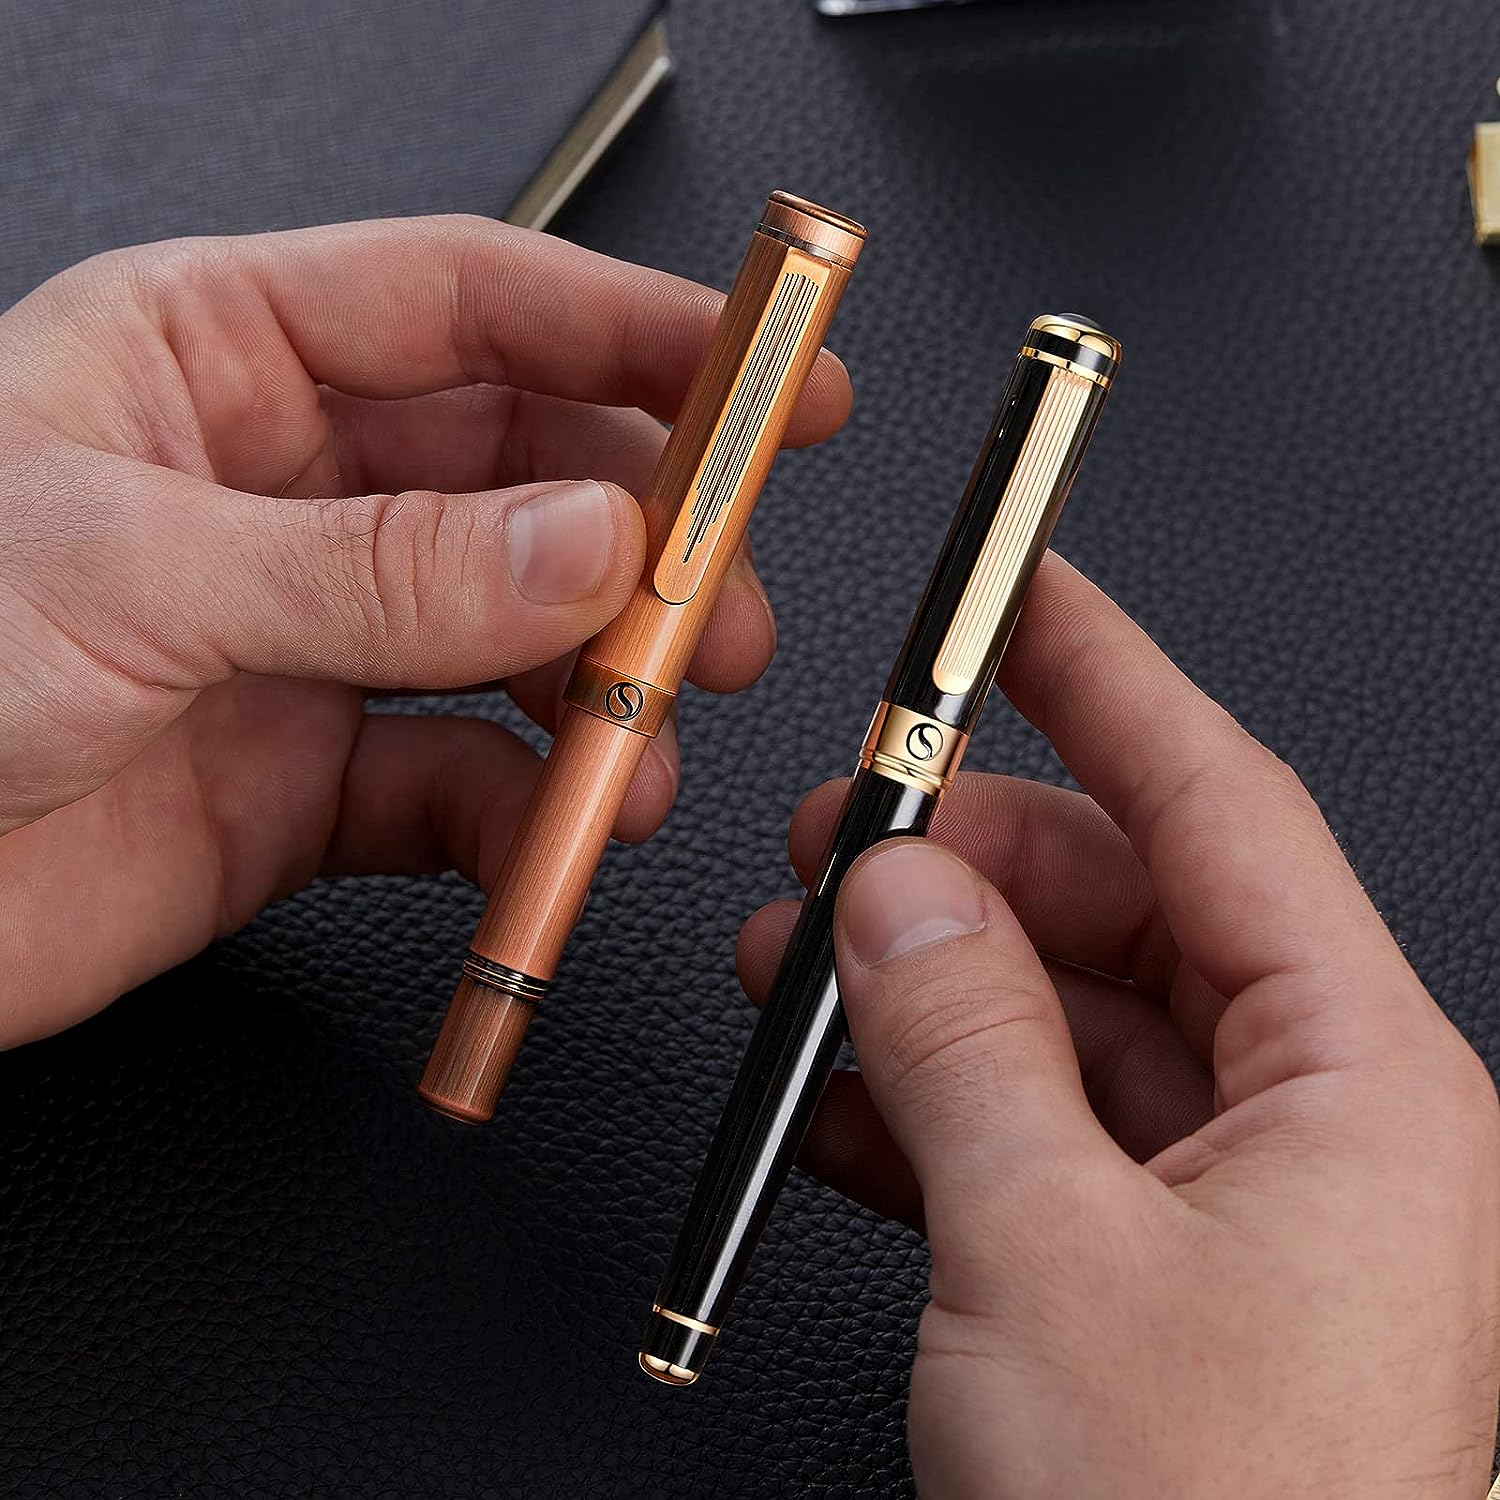 Scriveiner EDC Luxury Rollerball Pen, Stunning Heavy Pocket Pen, Hand Brushed Copper Finish